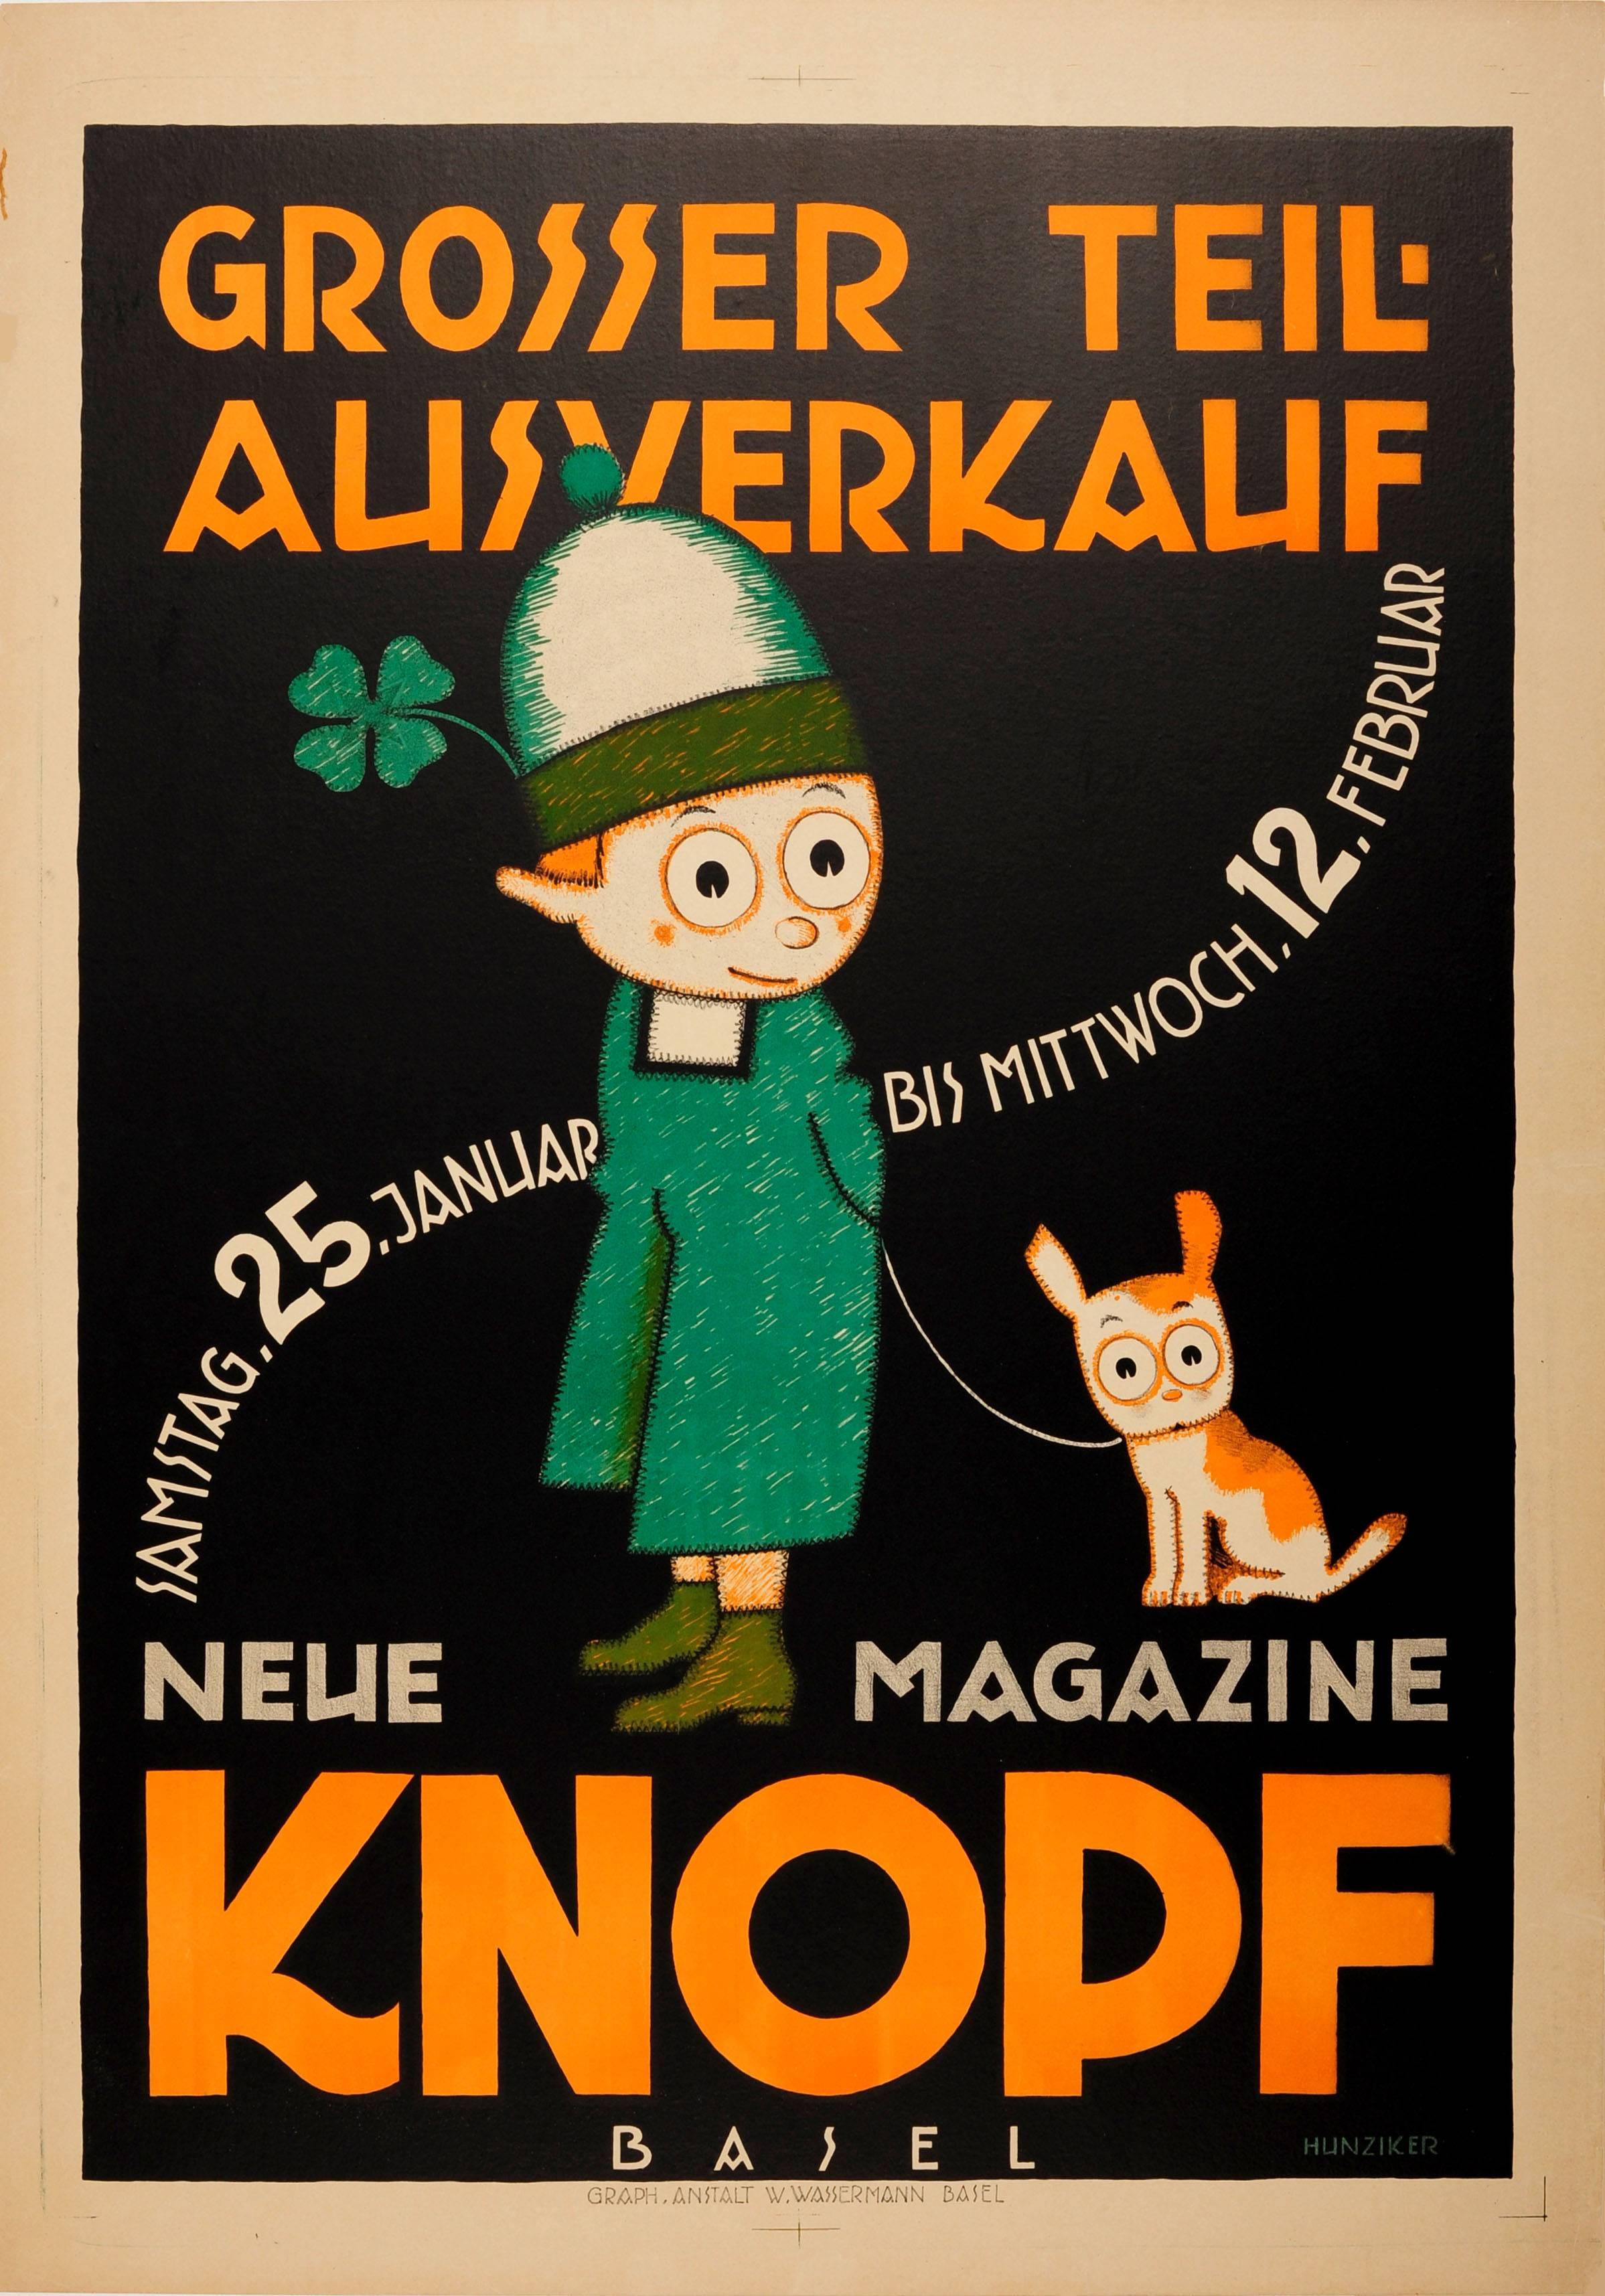 Gerold Hunziker Print - Original Vintage Poster By Hunziker for a Sale at Knopf Children's Shop in Basel